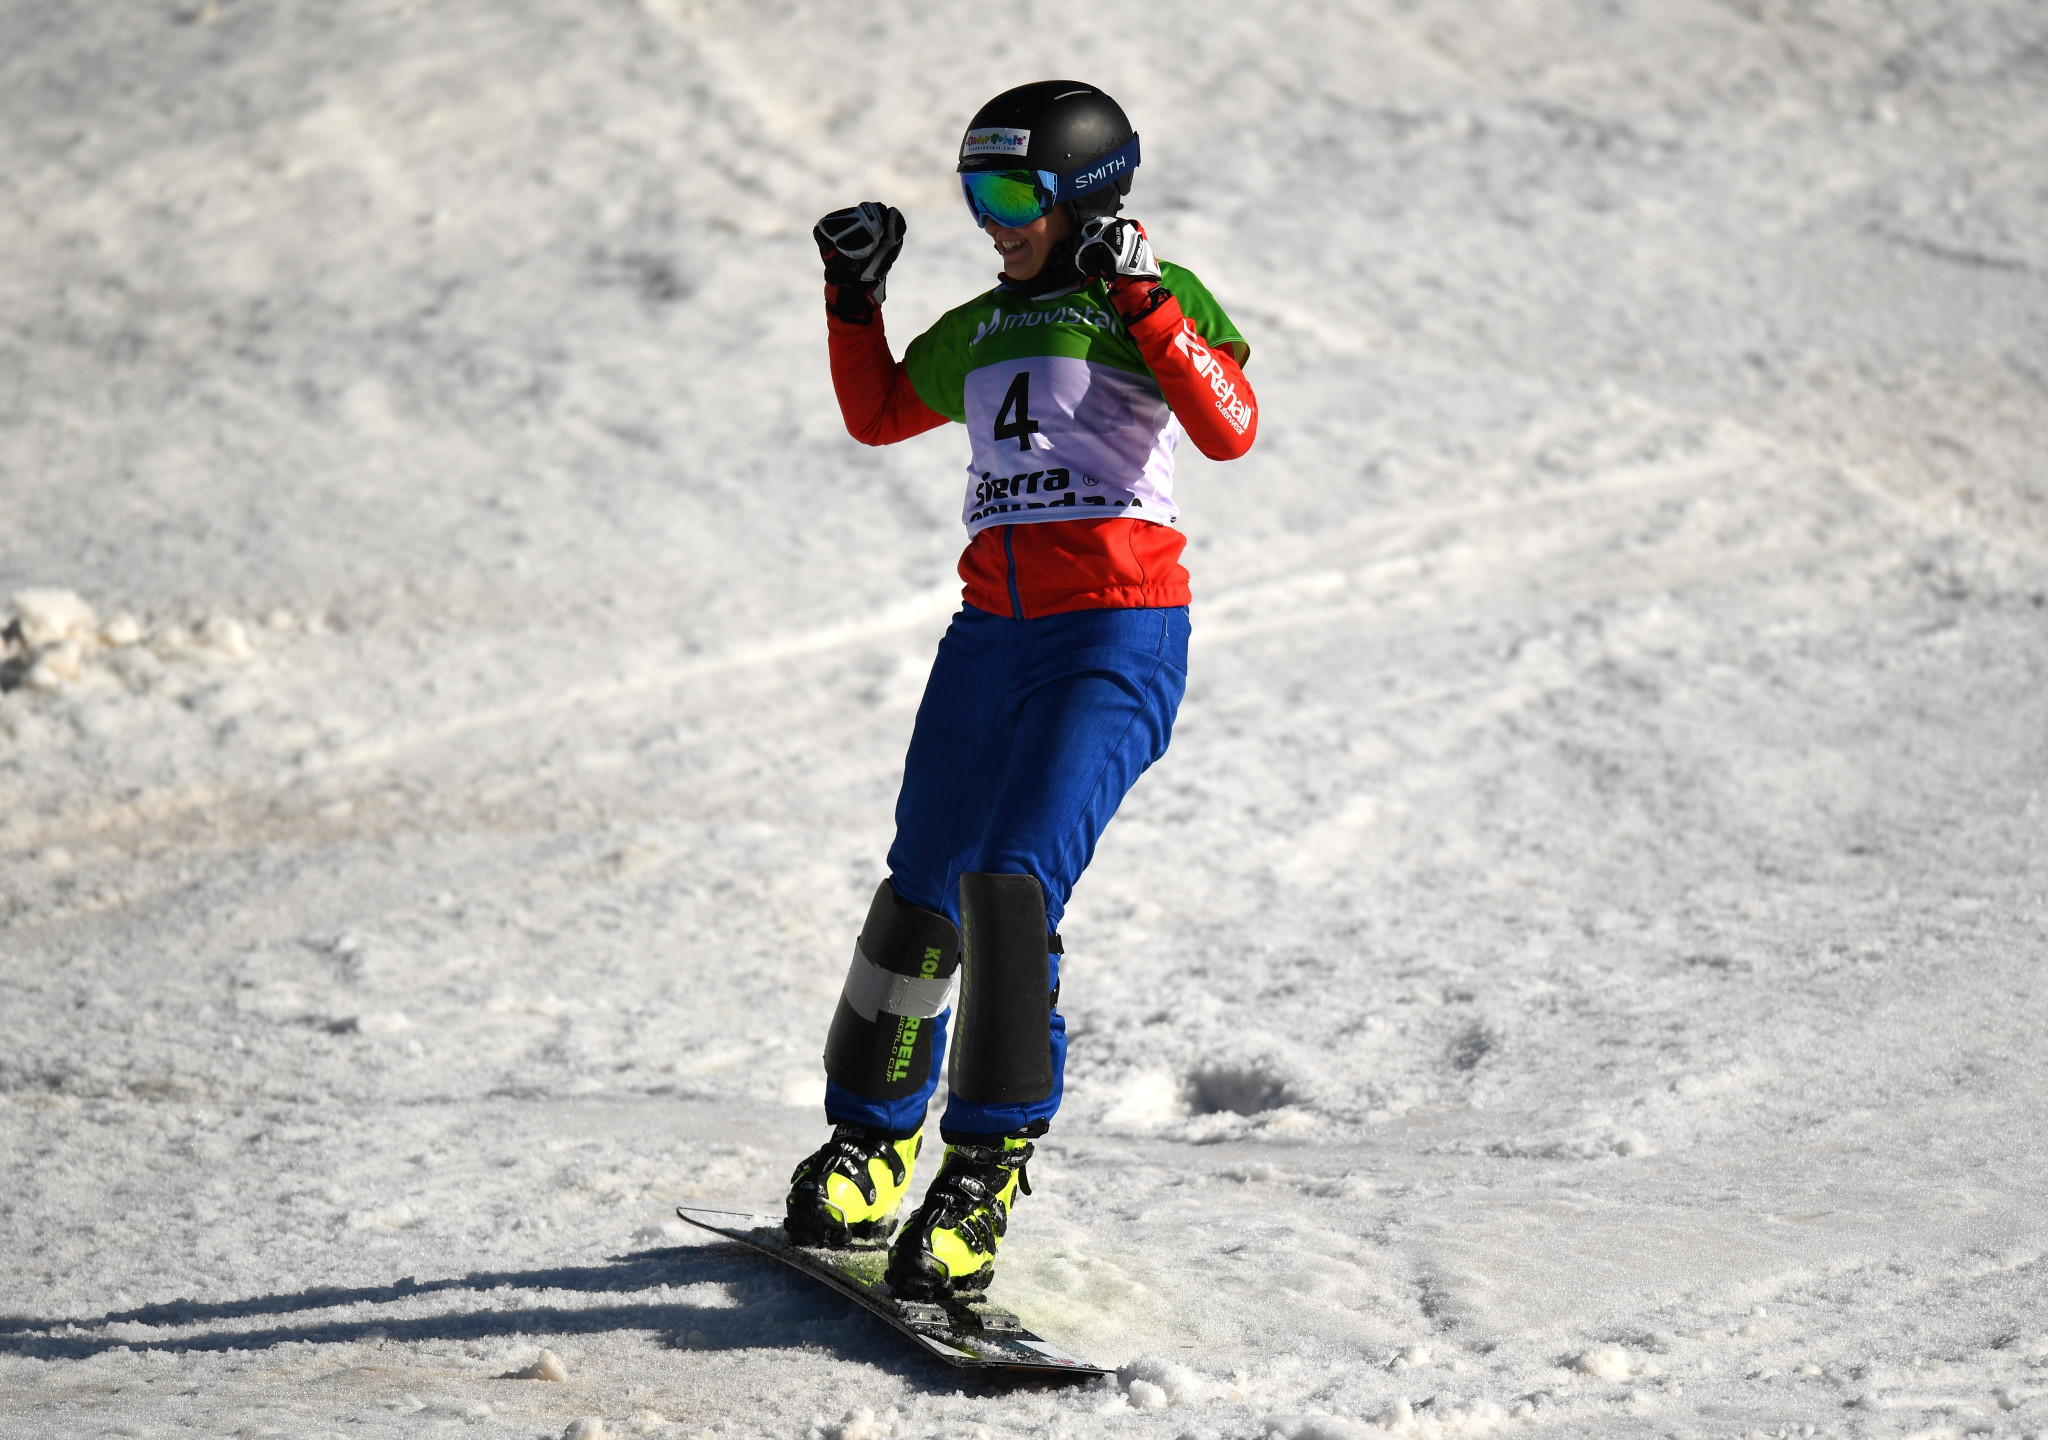 Italians Hofer and Coratti shine at in parallel slalom FIS Alpine Snowboard World Cup in Piancavallo